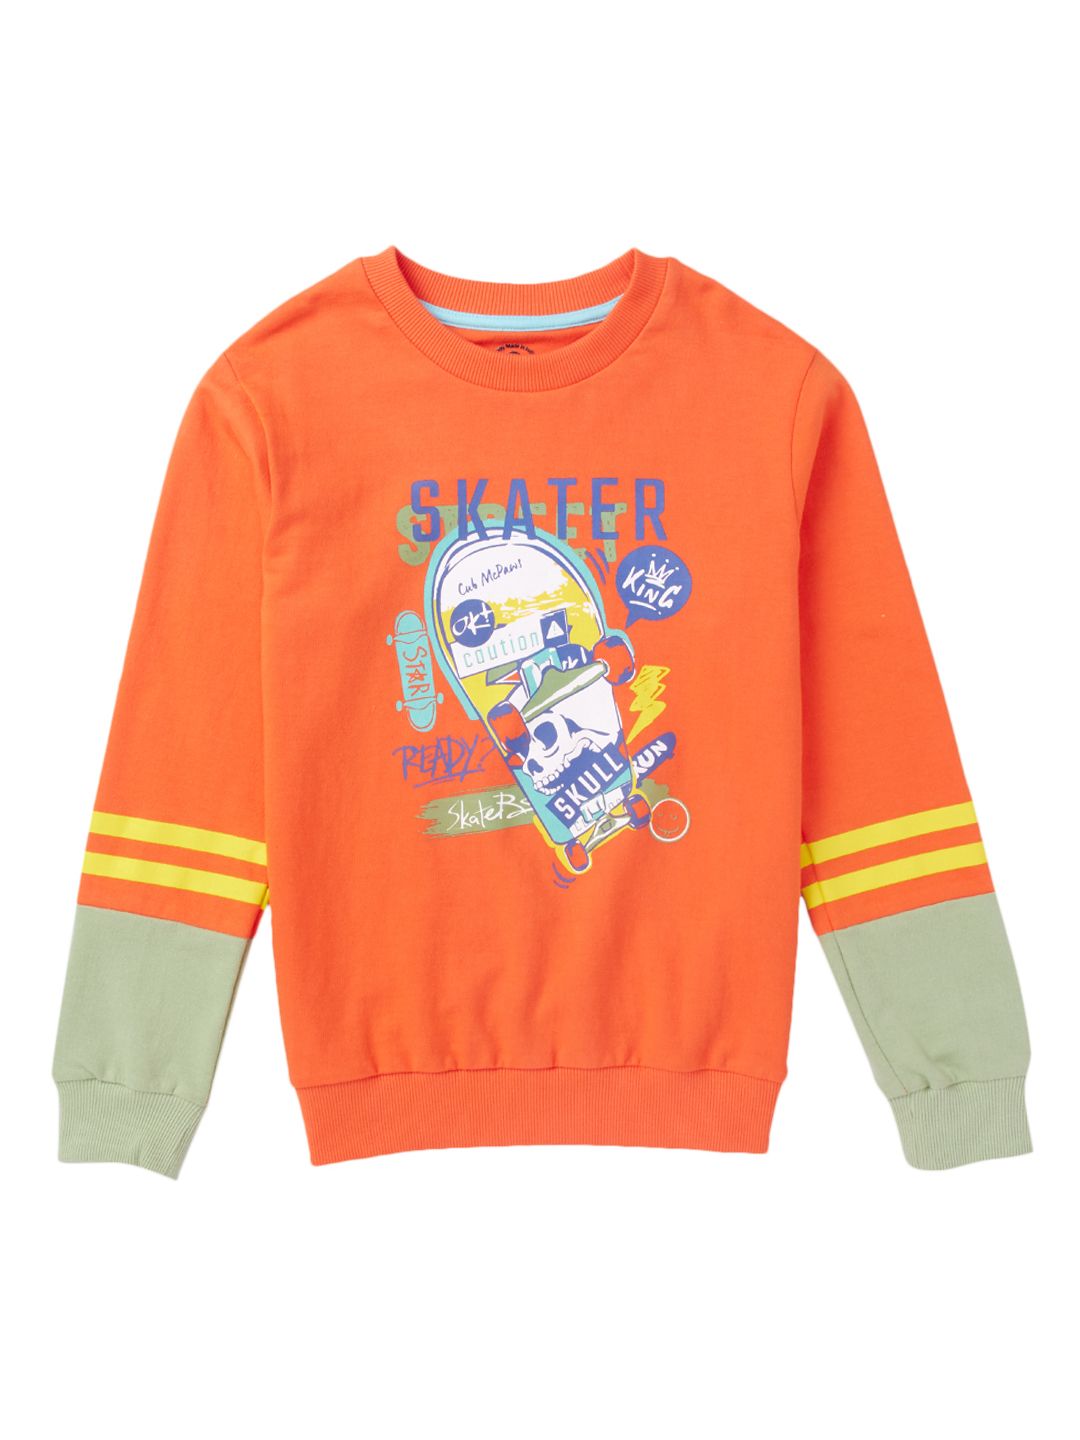 Boys Regular Fit Cotton Crew Neck Fashion Sweatshirt, Orange